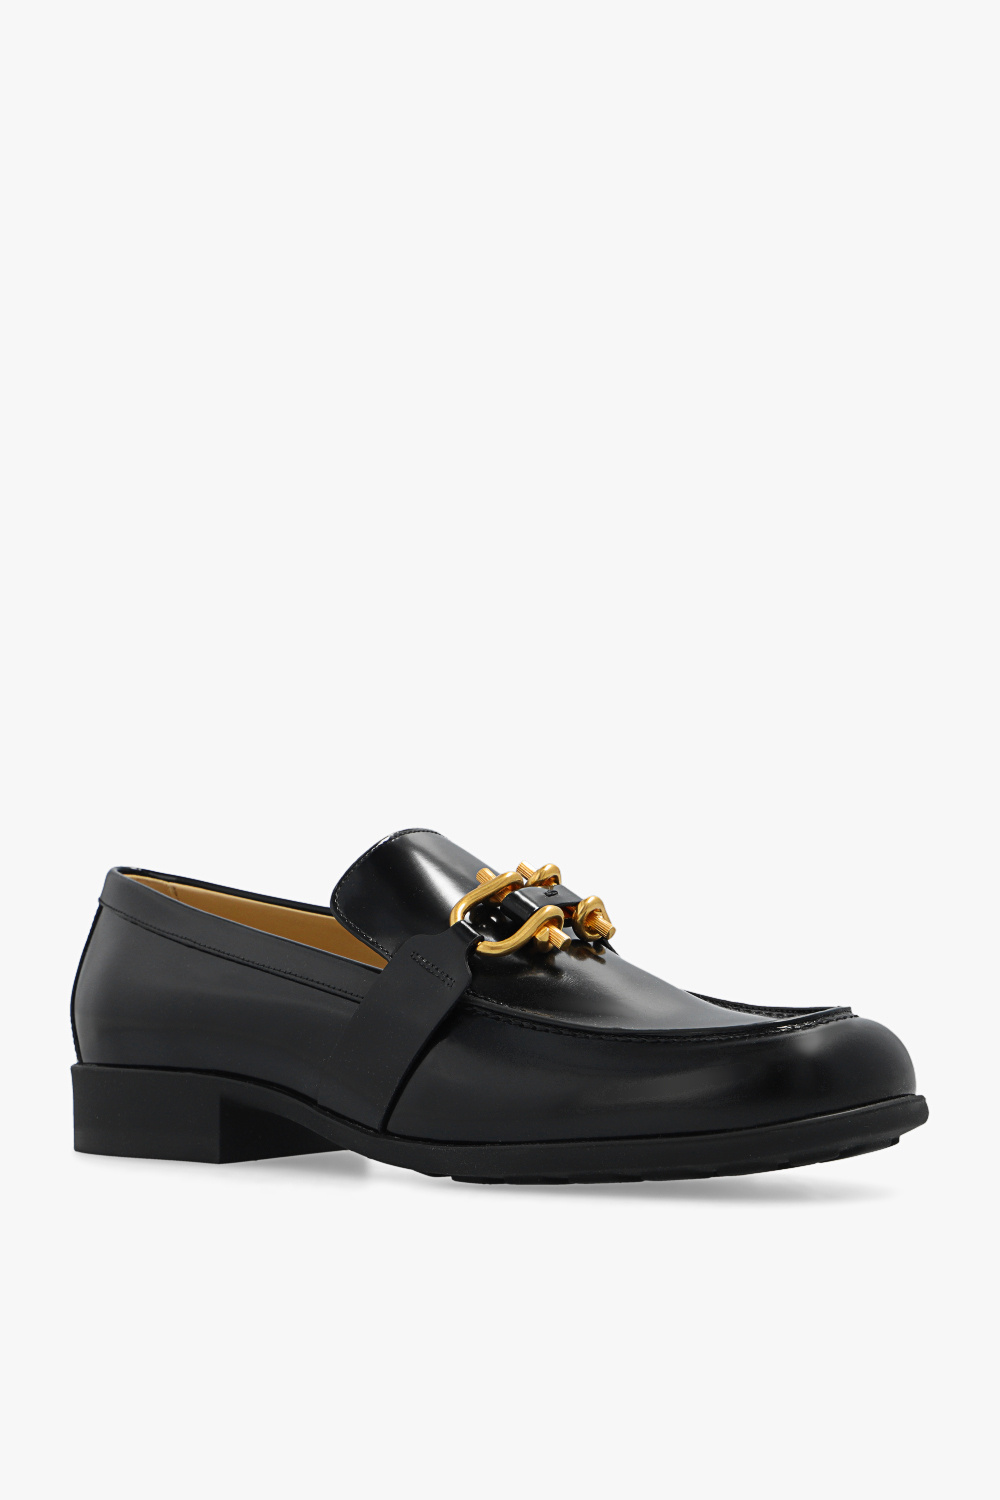 bottega coat Veneta ‘Monsieur’ leather loafers